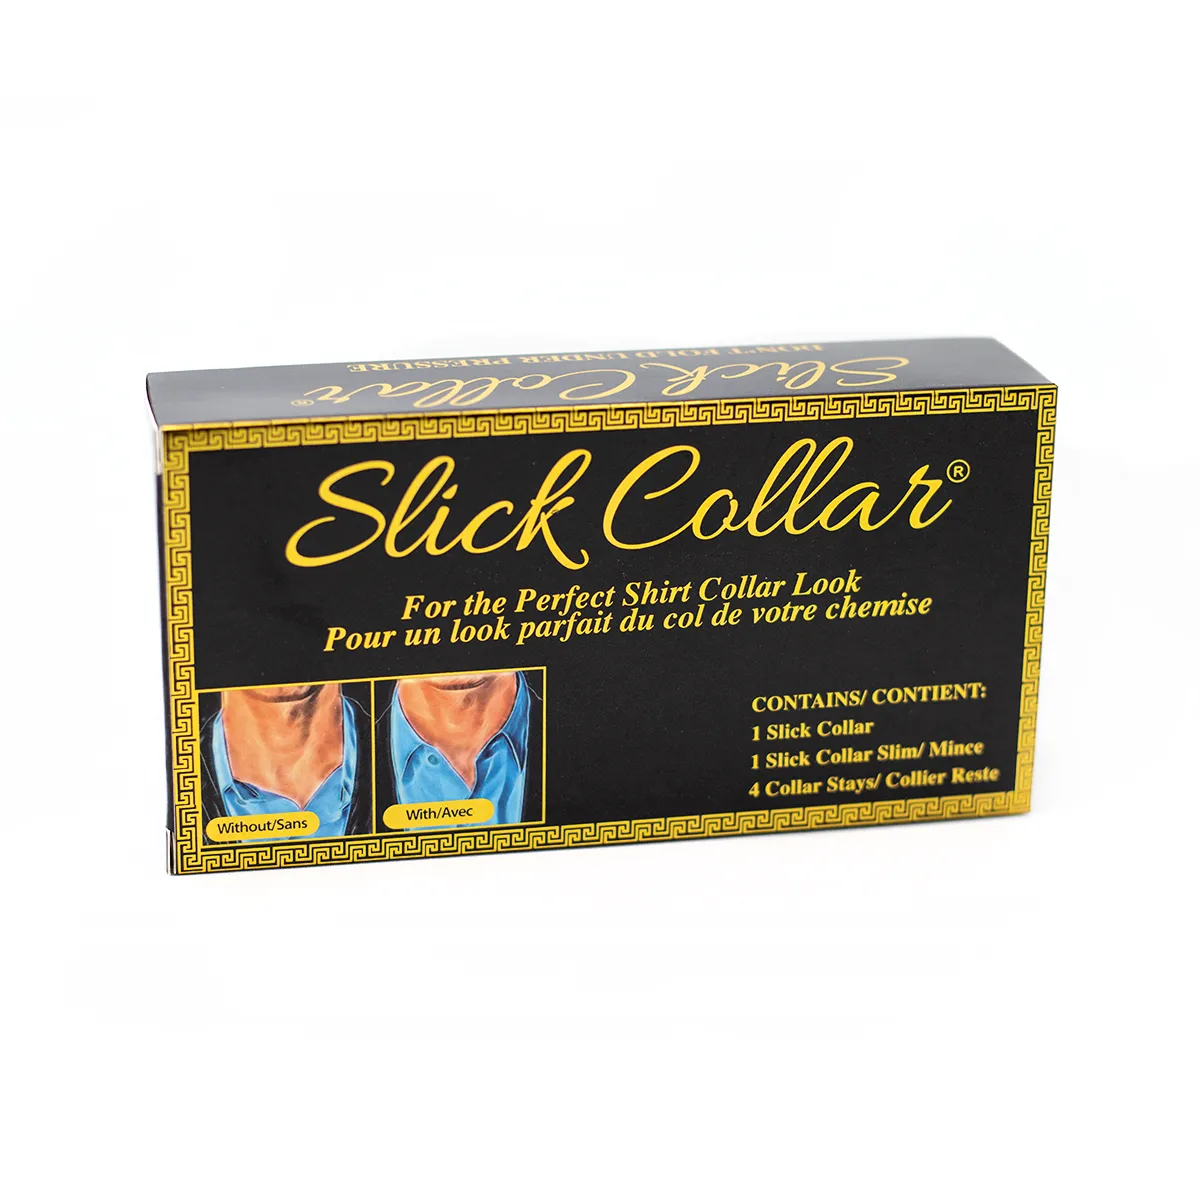 Slick Collar Set Completen Shirt Collar Support System